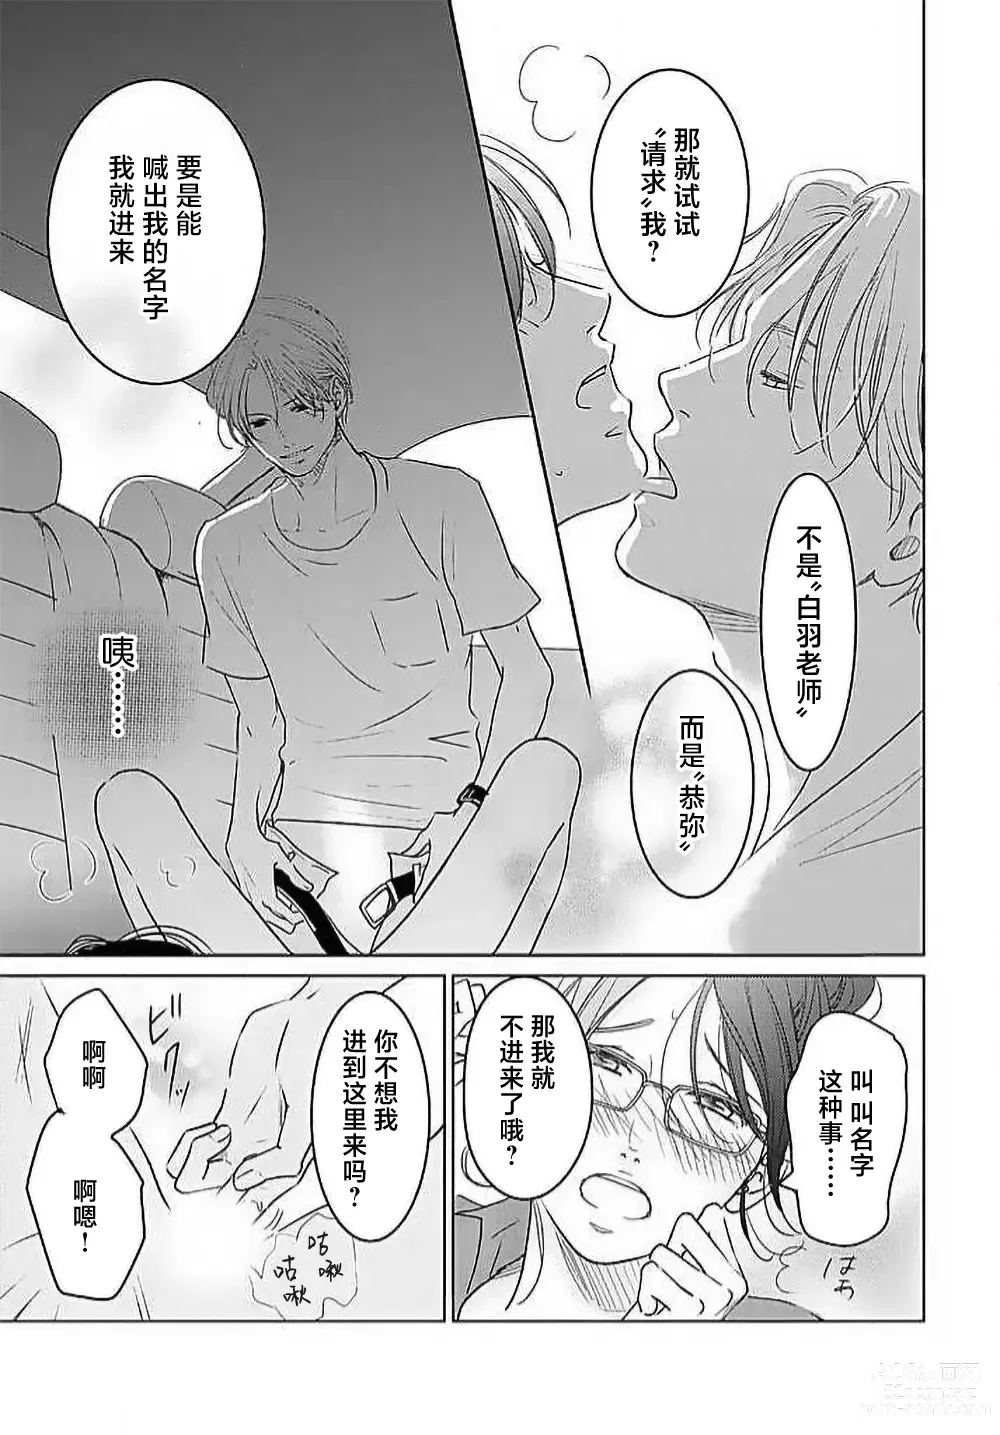 Page 188 of manga 今夜、于保健室甜蜜融化 1-5